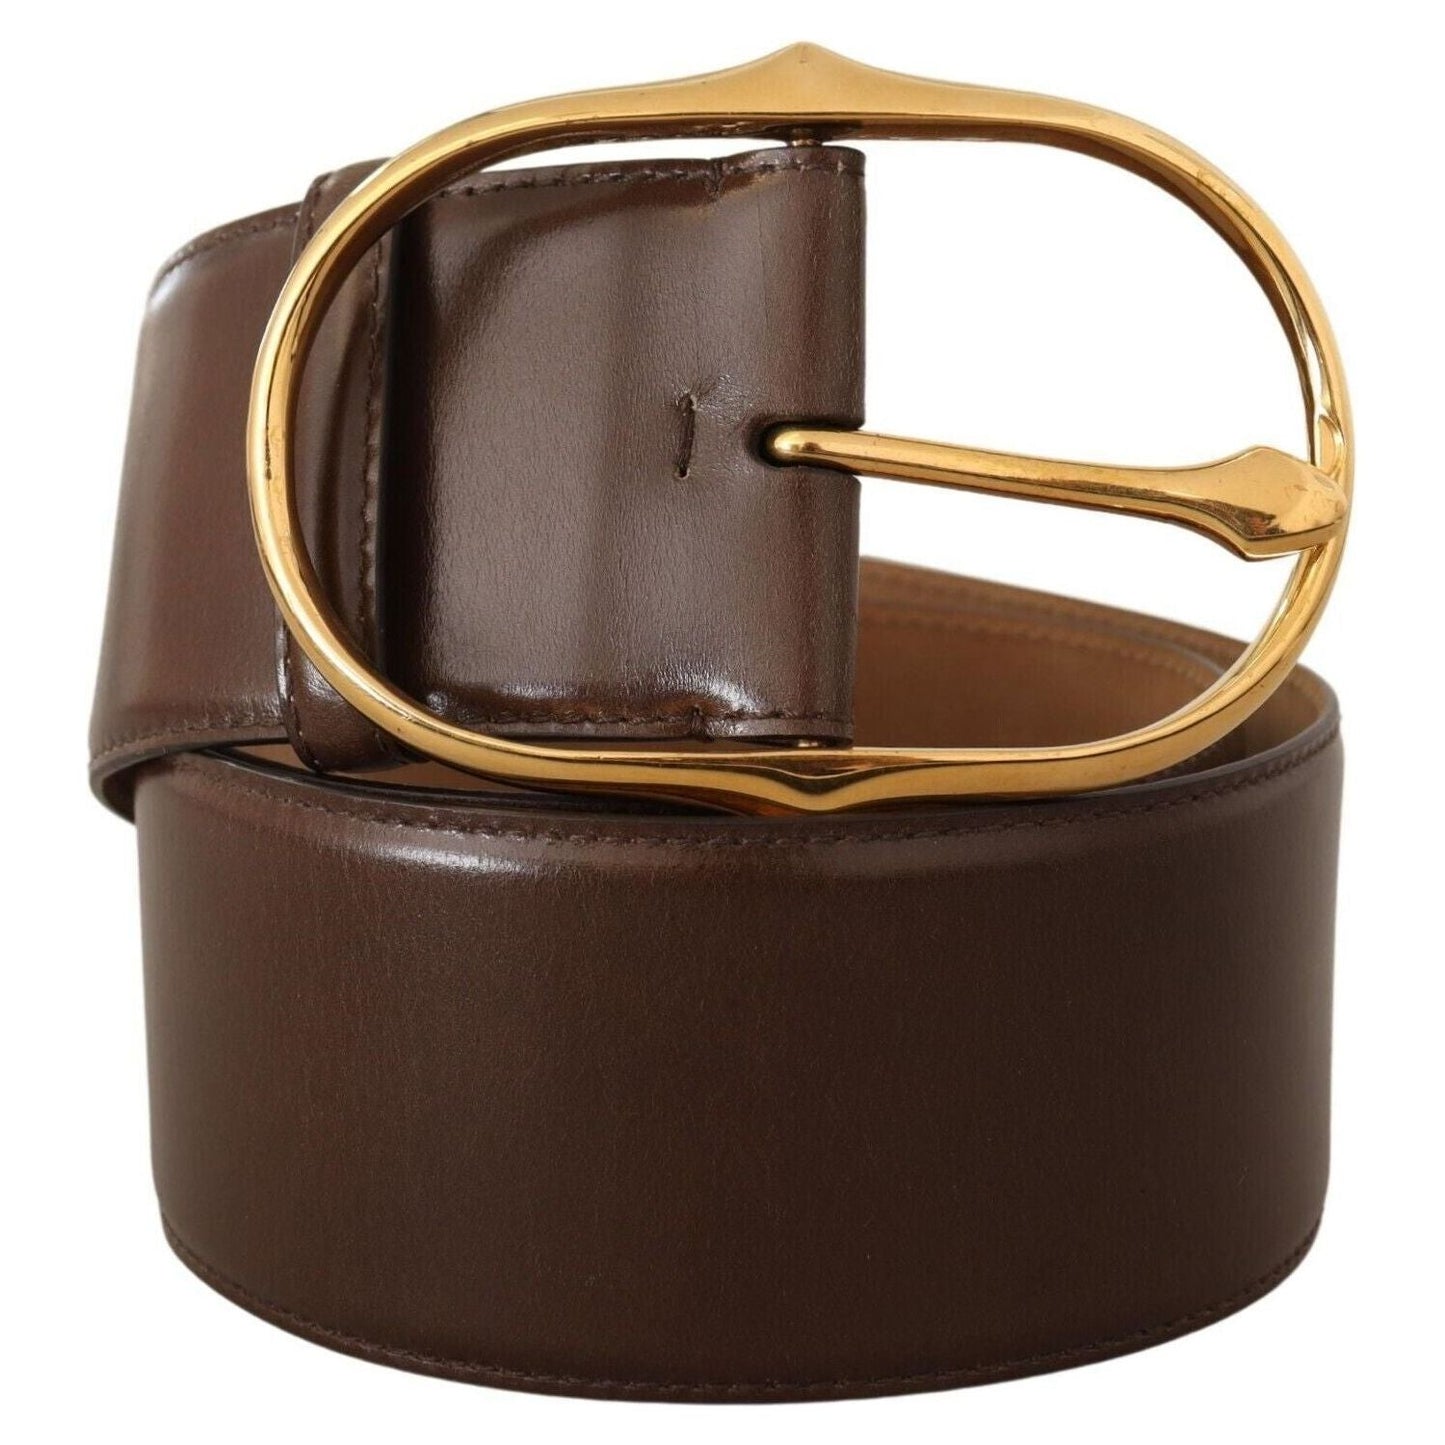 Dolce & Gabbana Elegant Brown Leather Belt with Gold Buckle brown-leather-gold-metal-oval-buckle-belt-7 s-l1600-1-290-17fae6e0-35f.jpg